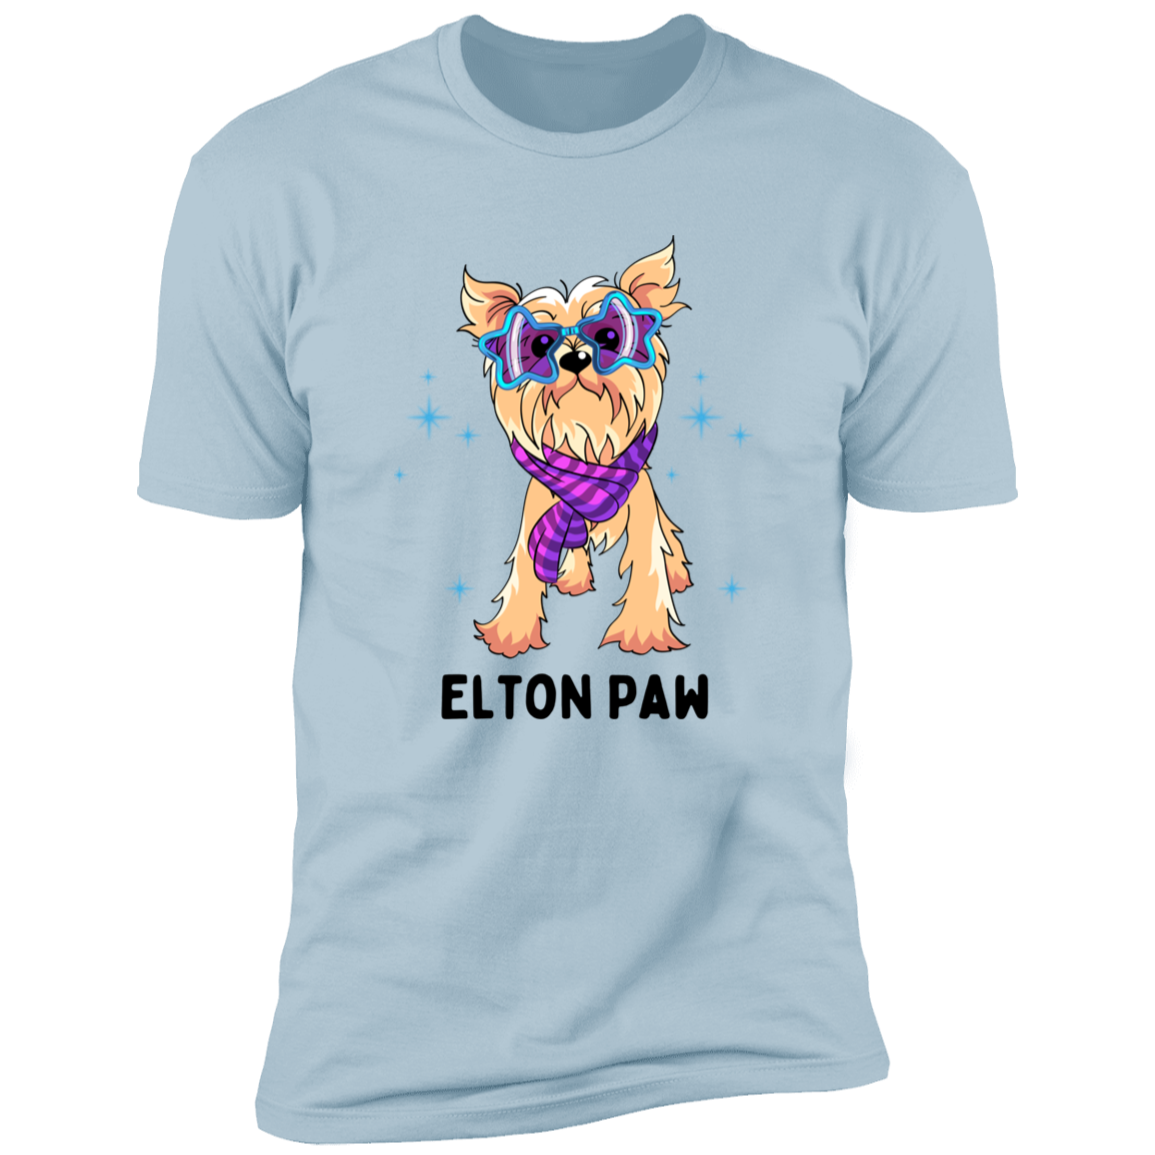 Elton Paw Dog Shirt, Funny dog shirt for humans, Dog mom shirt, dog dad shirt, in light blue